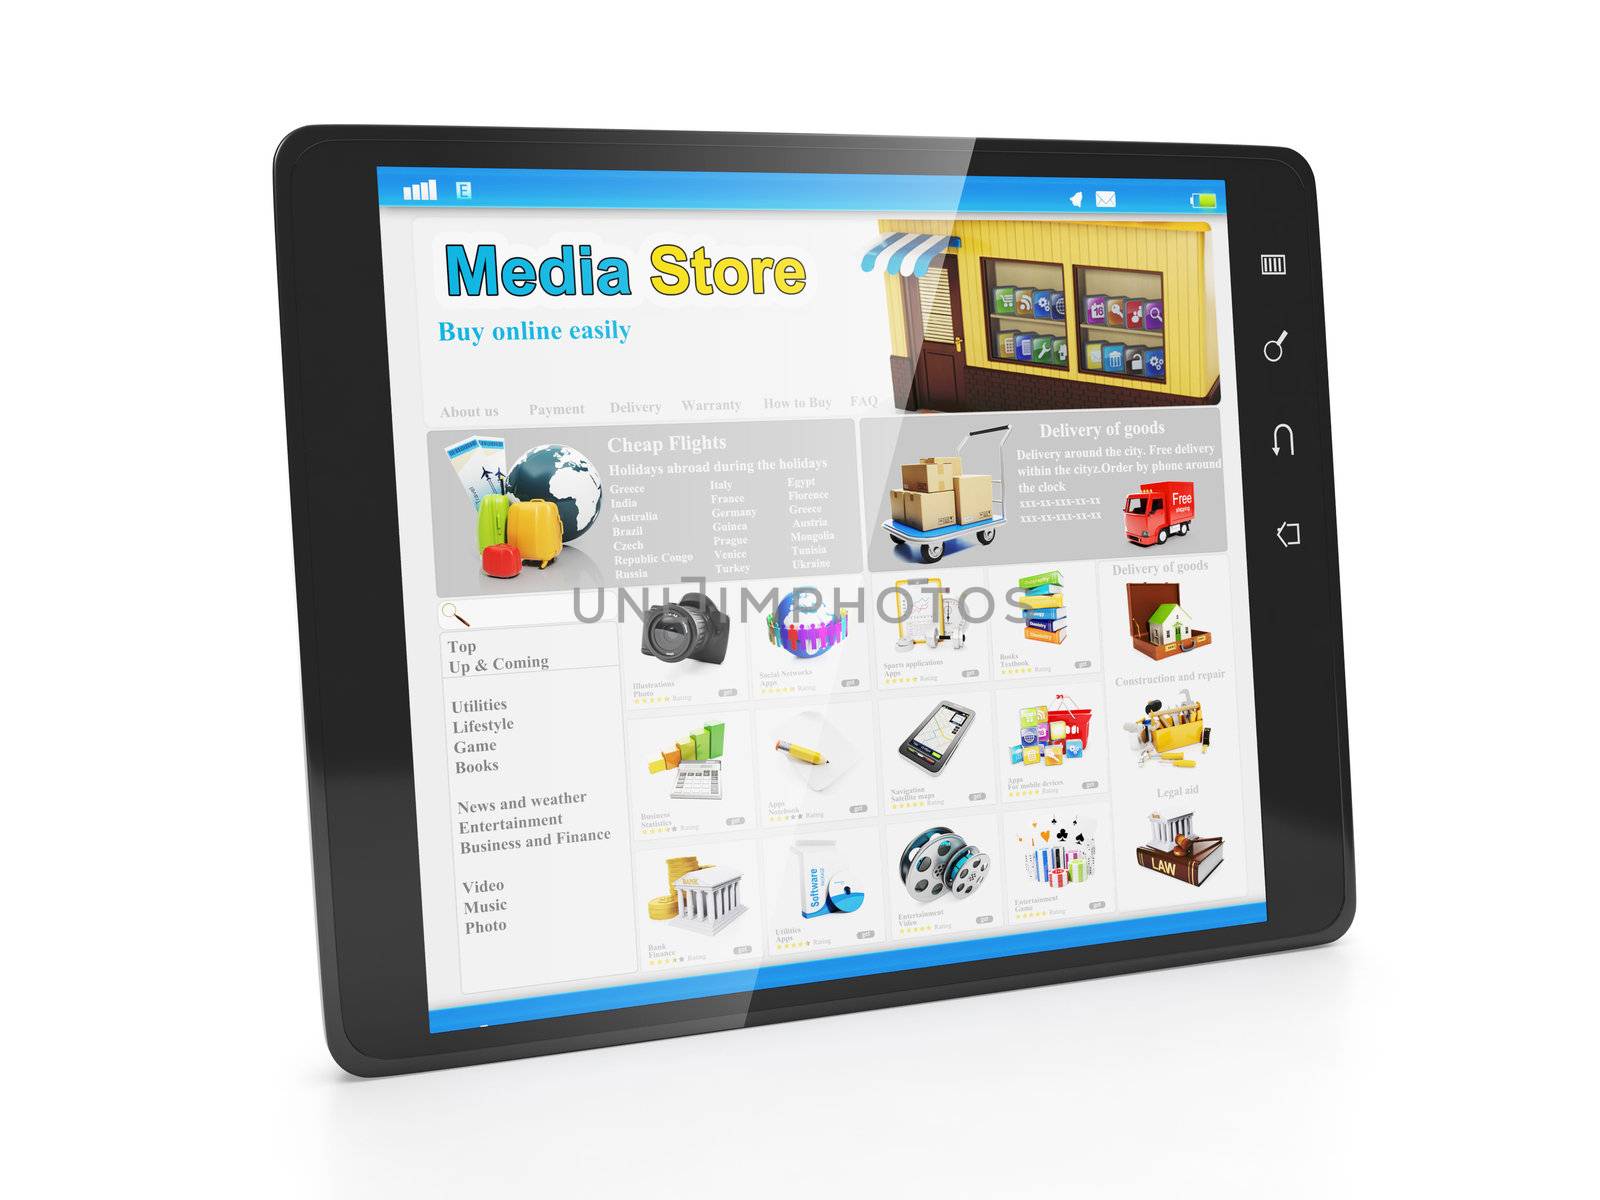 Store media applications. Tablet PC with an open webpage copper  by kolobsek